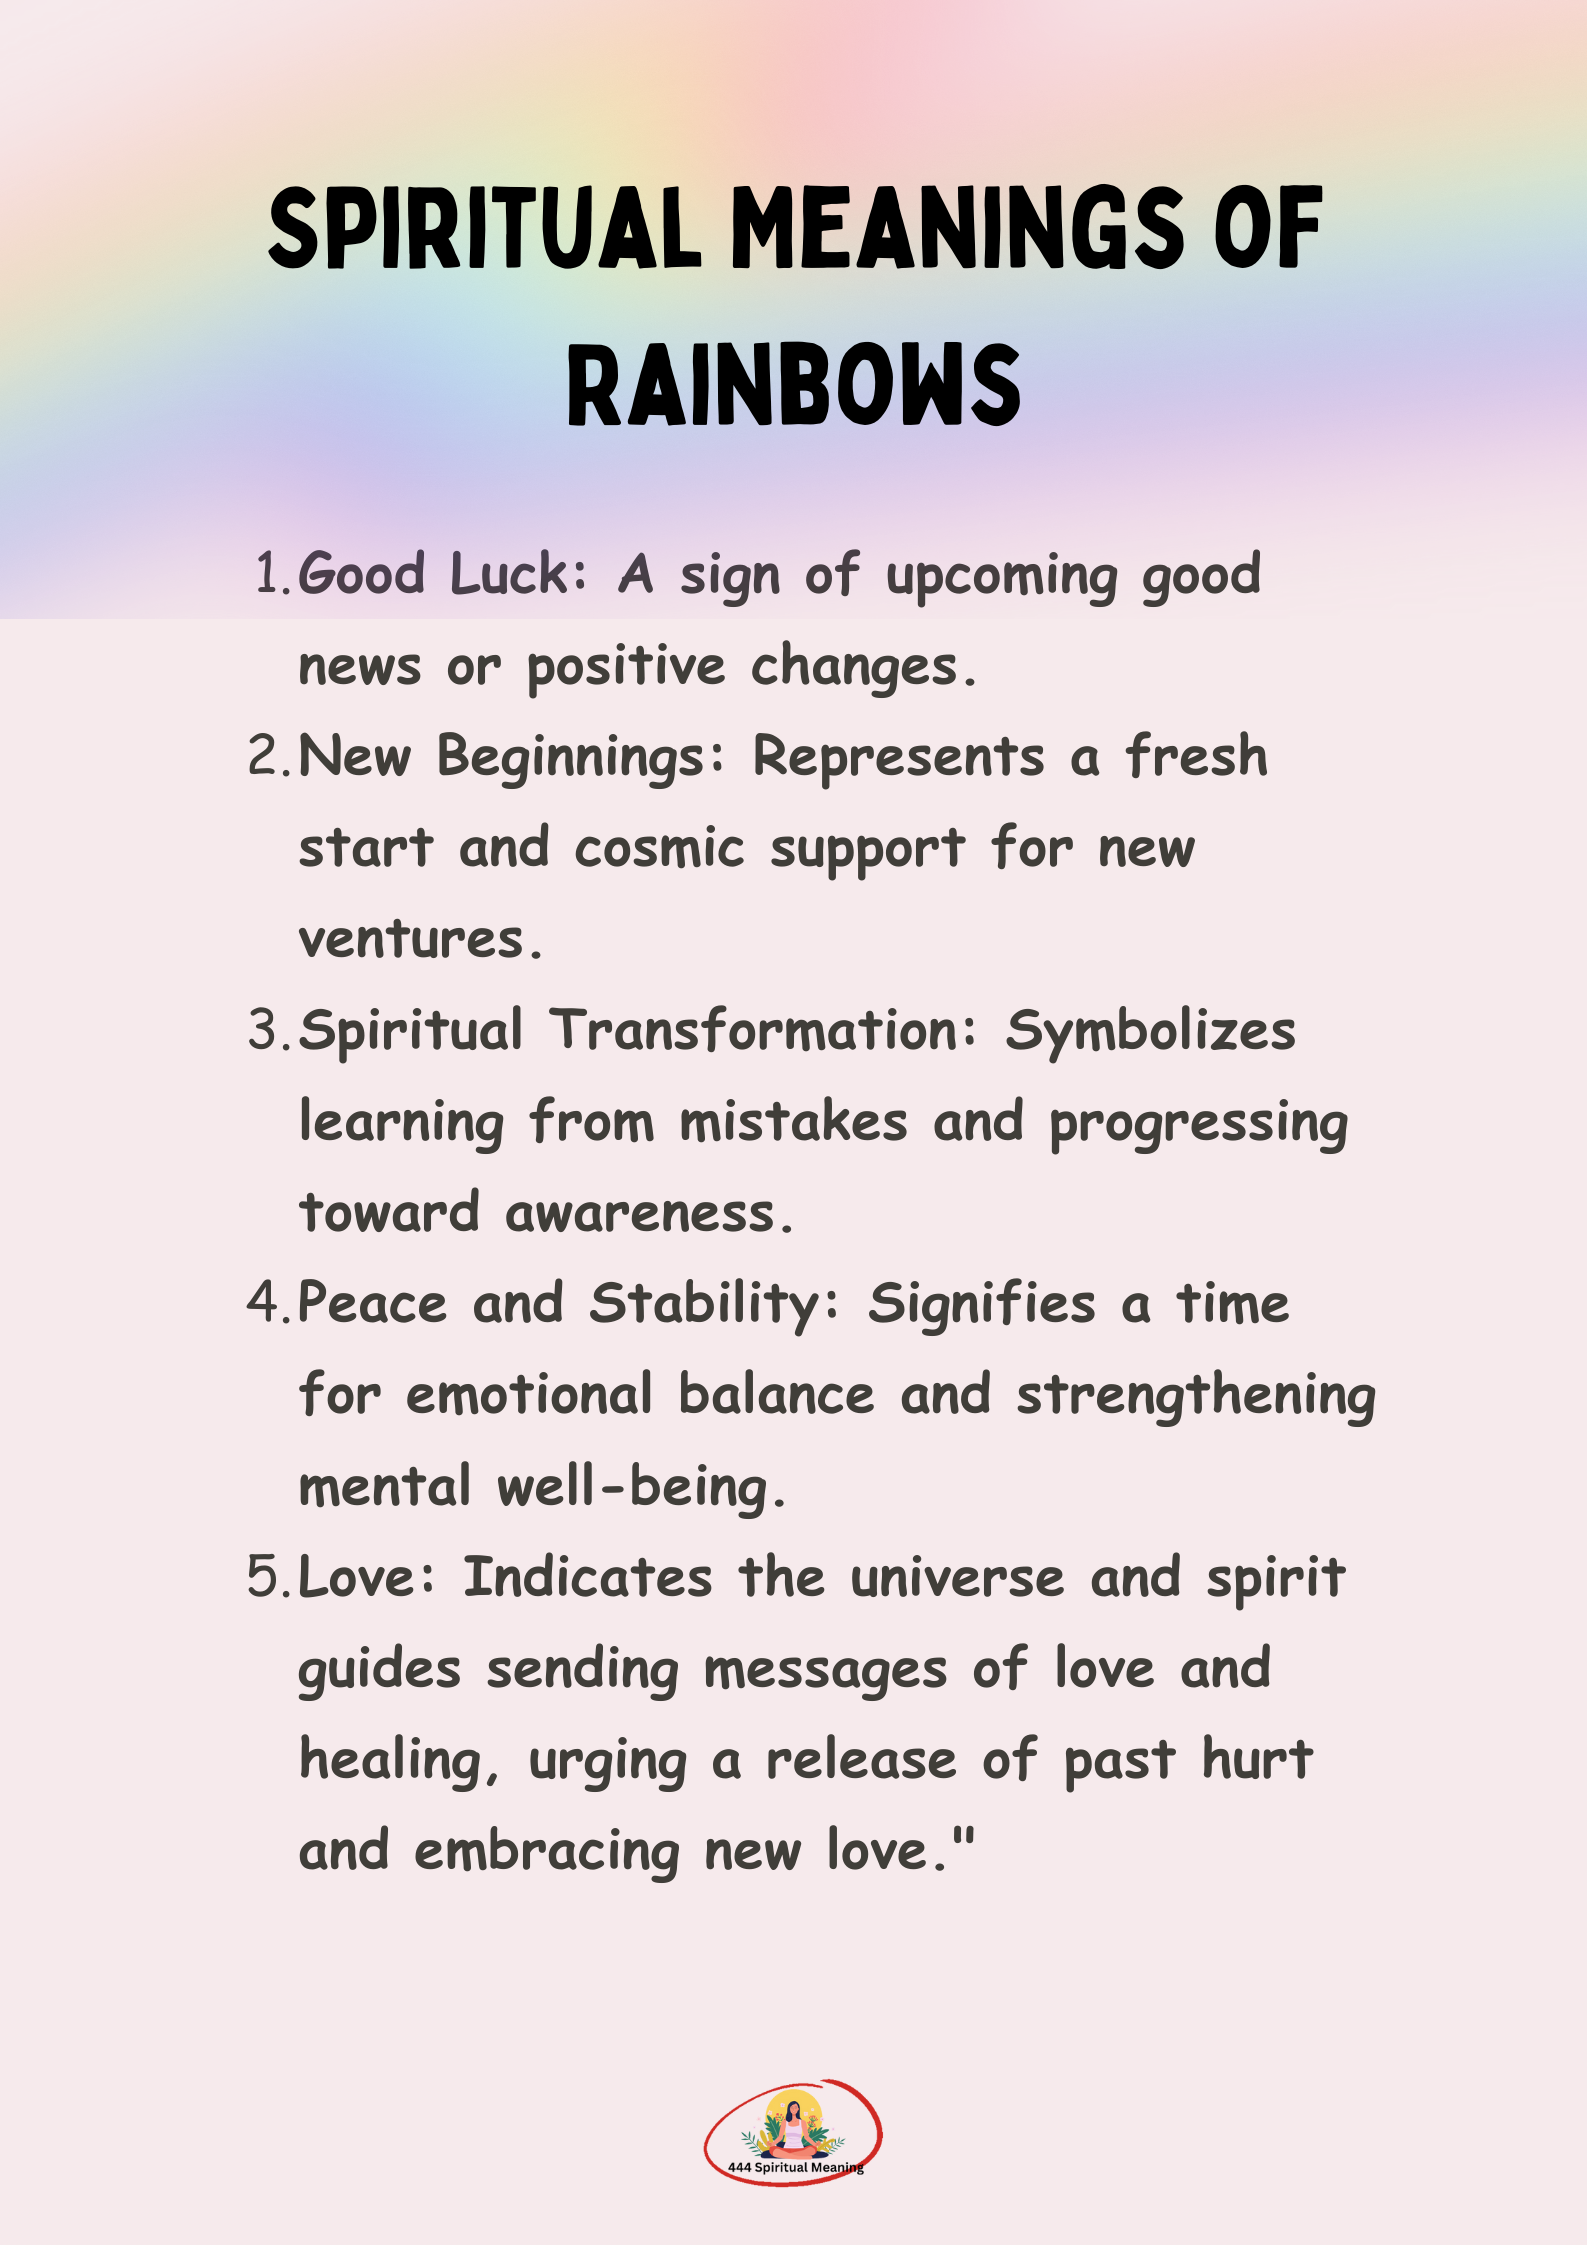 Spiritual Meanings of Rainbows